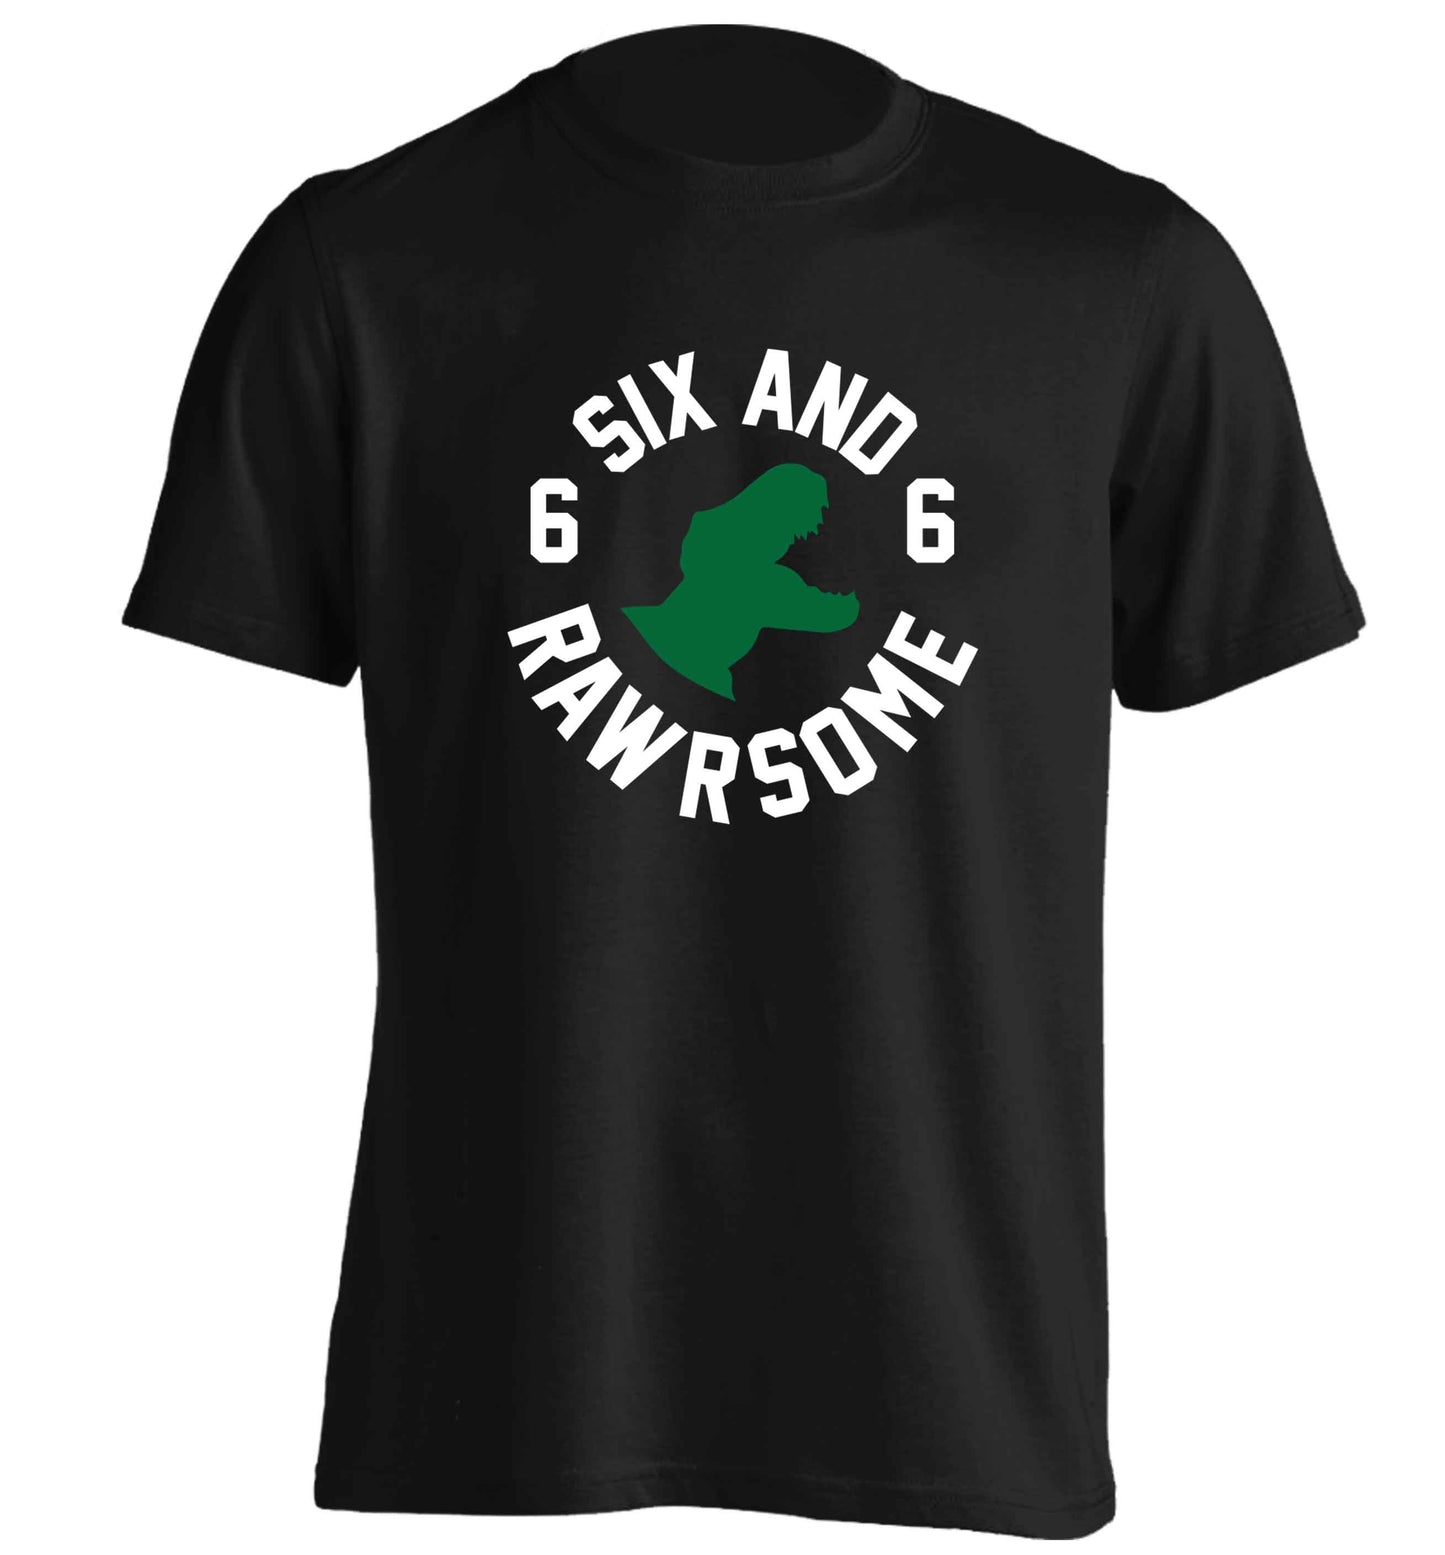 Six and rawrsome adults unisex black Tshirt 2XL